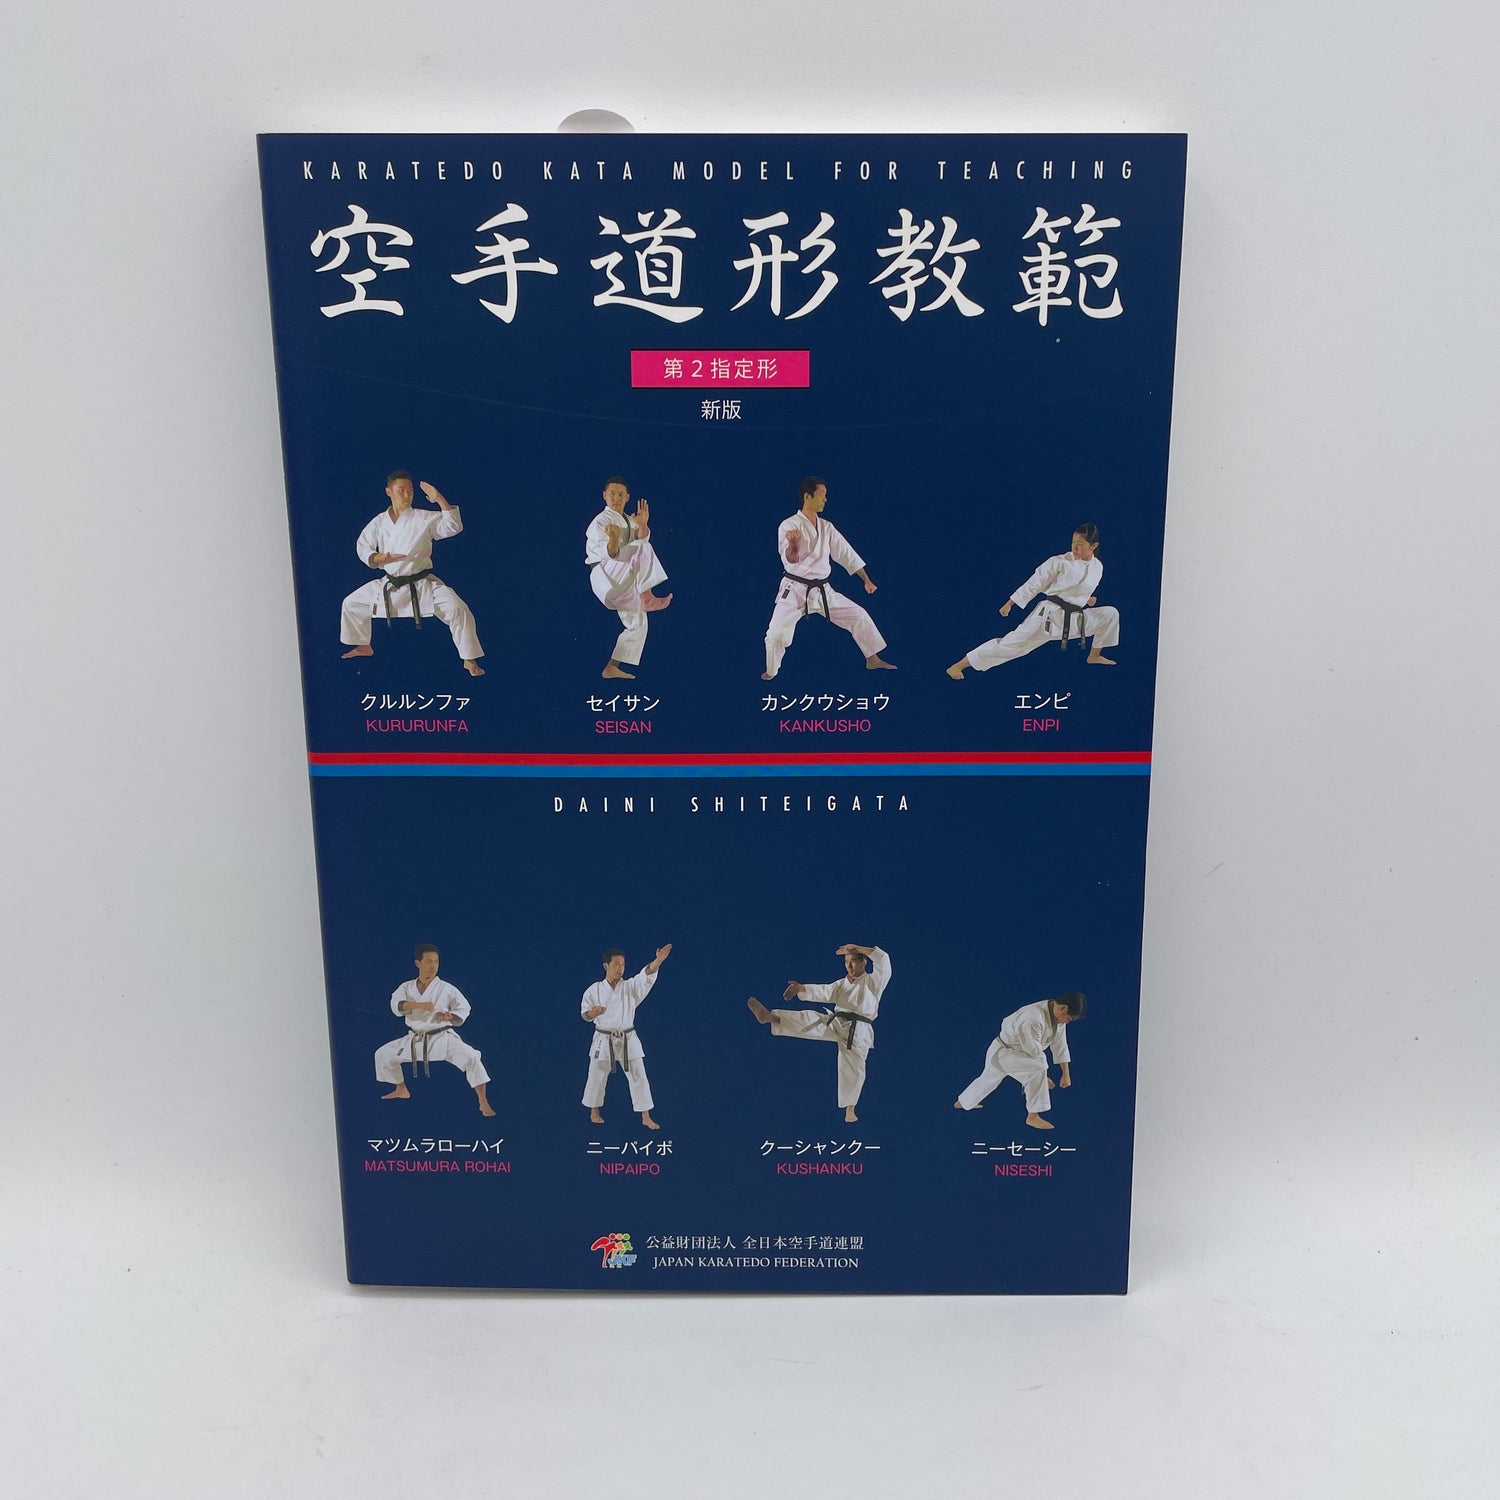 Modelo Karate-Do Kata para la enseñanza del libro Dai Ni Shitei Kata